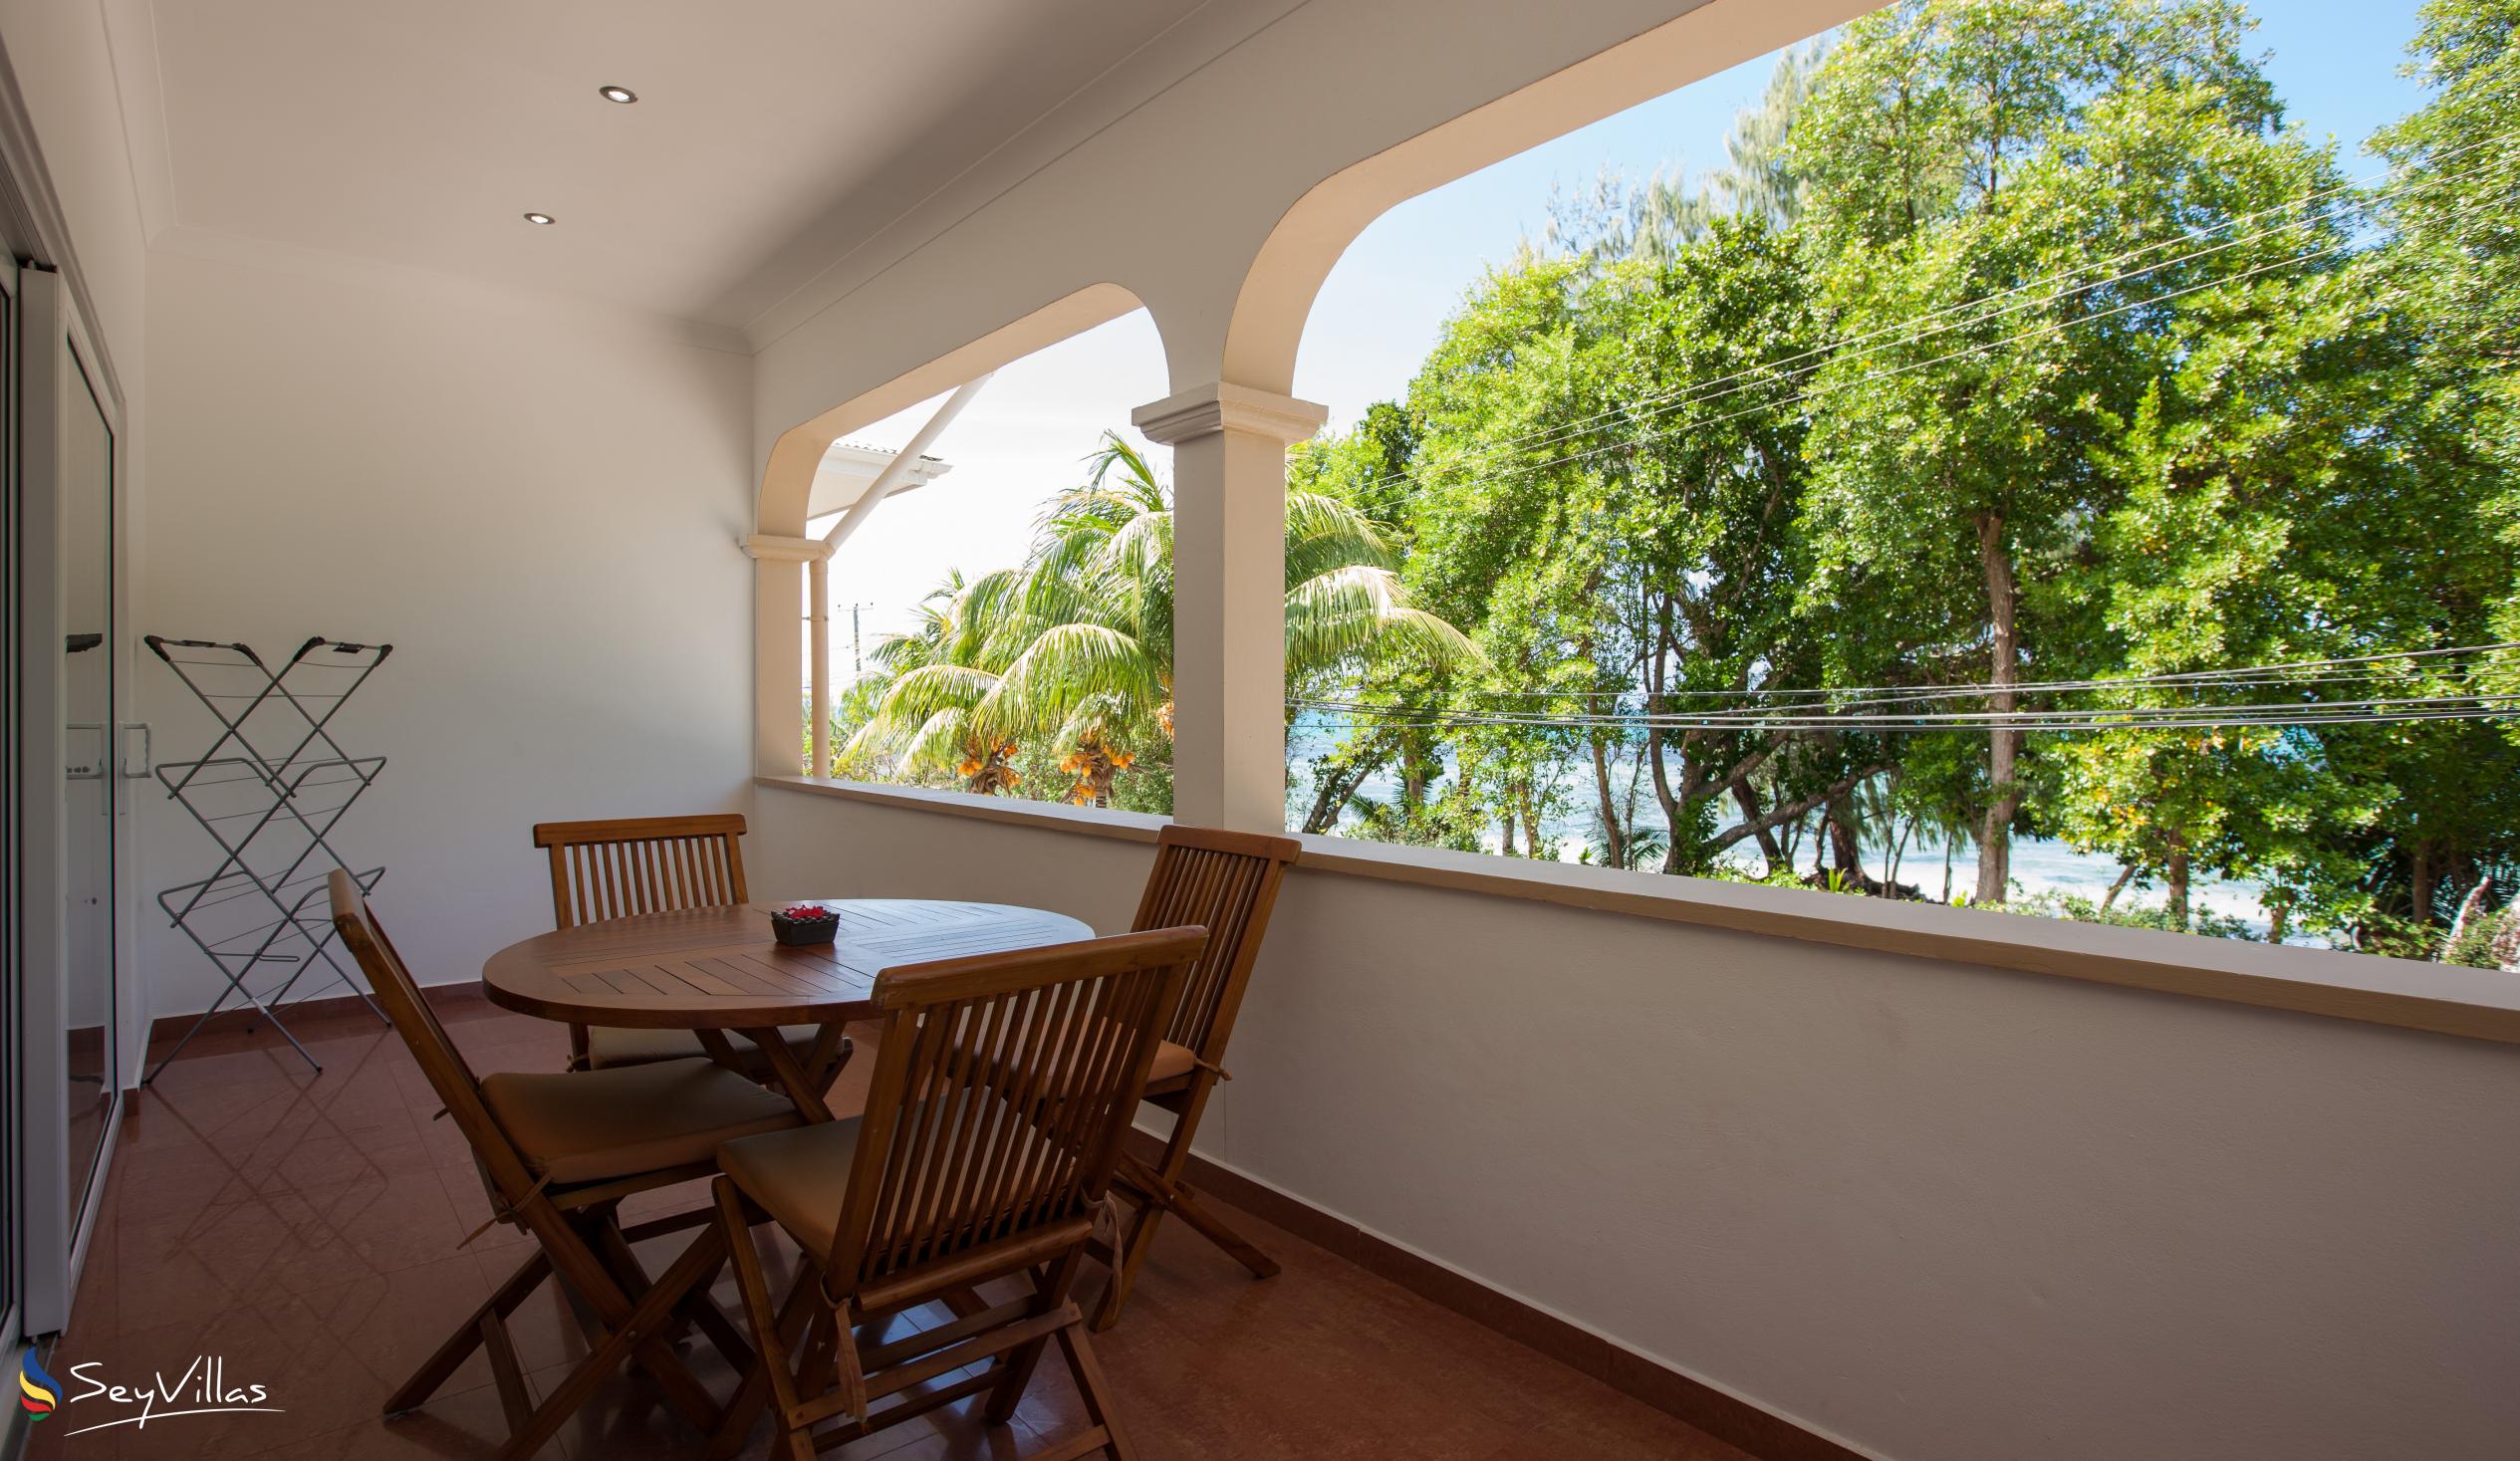 Foto 11: YASAD Luxury Beach Residence - Appartamento con 3 camere da letto - Praslin (Seychelles)